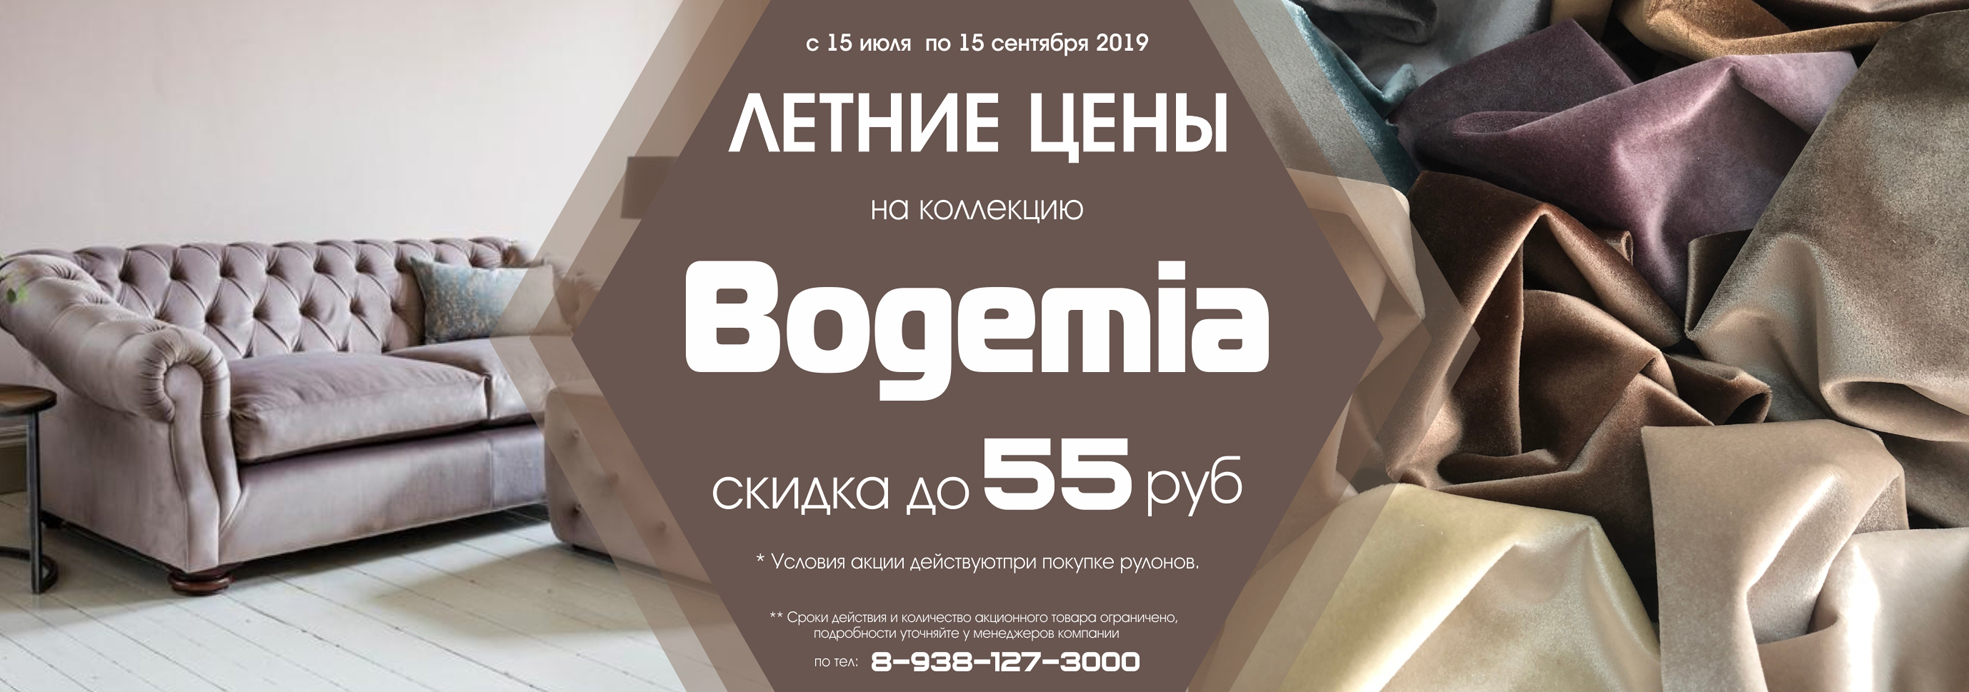 Best offer Bogemia